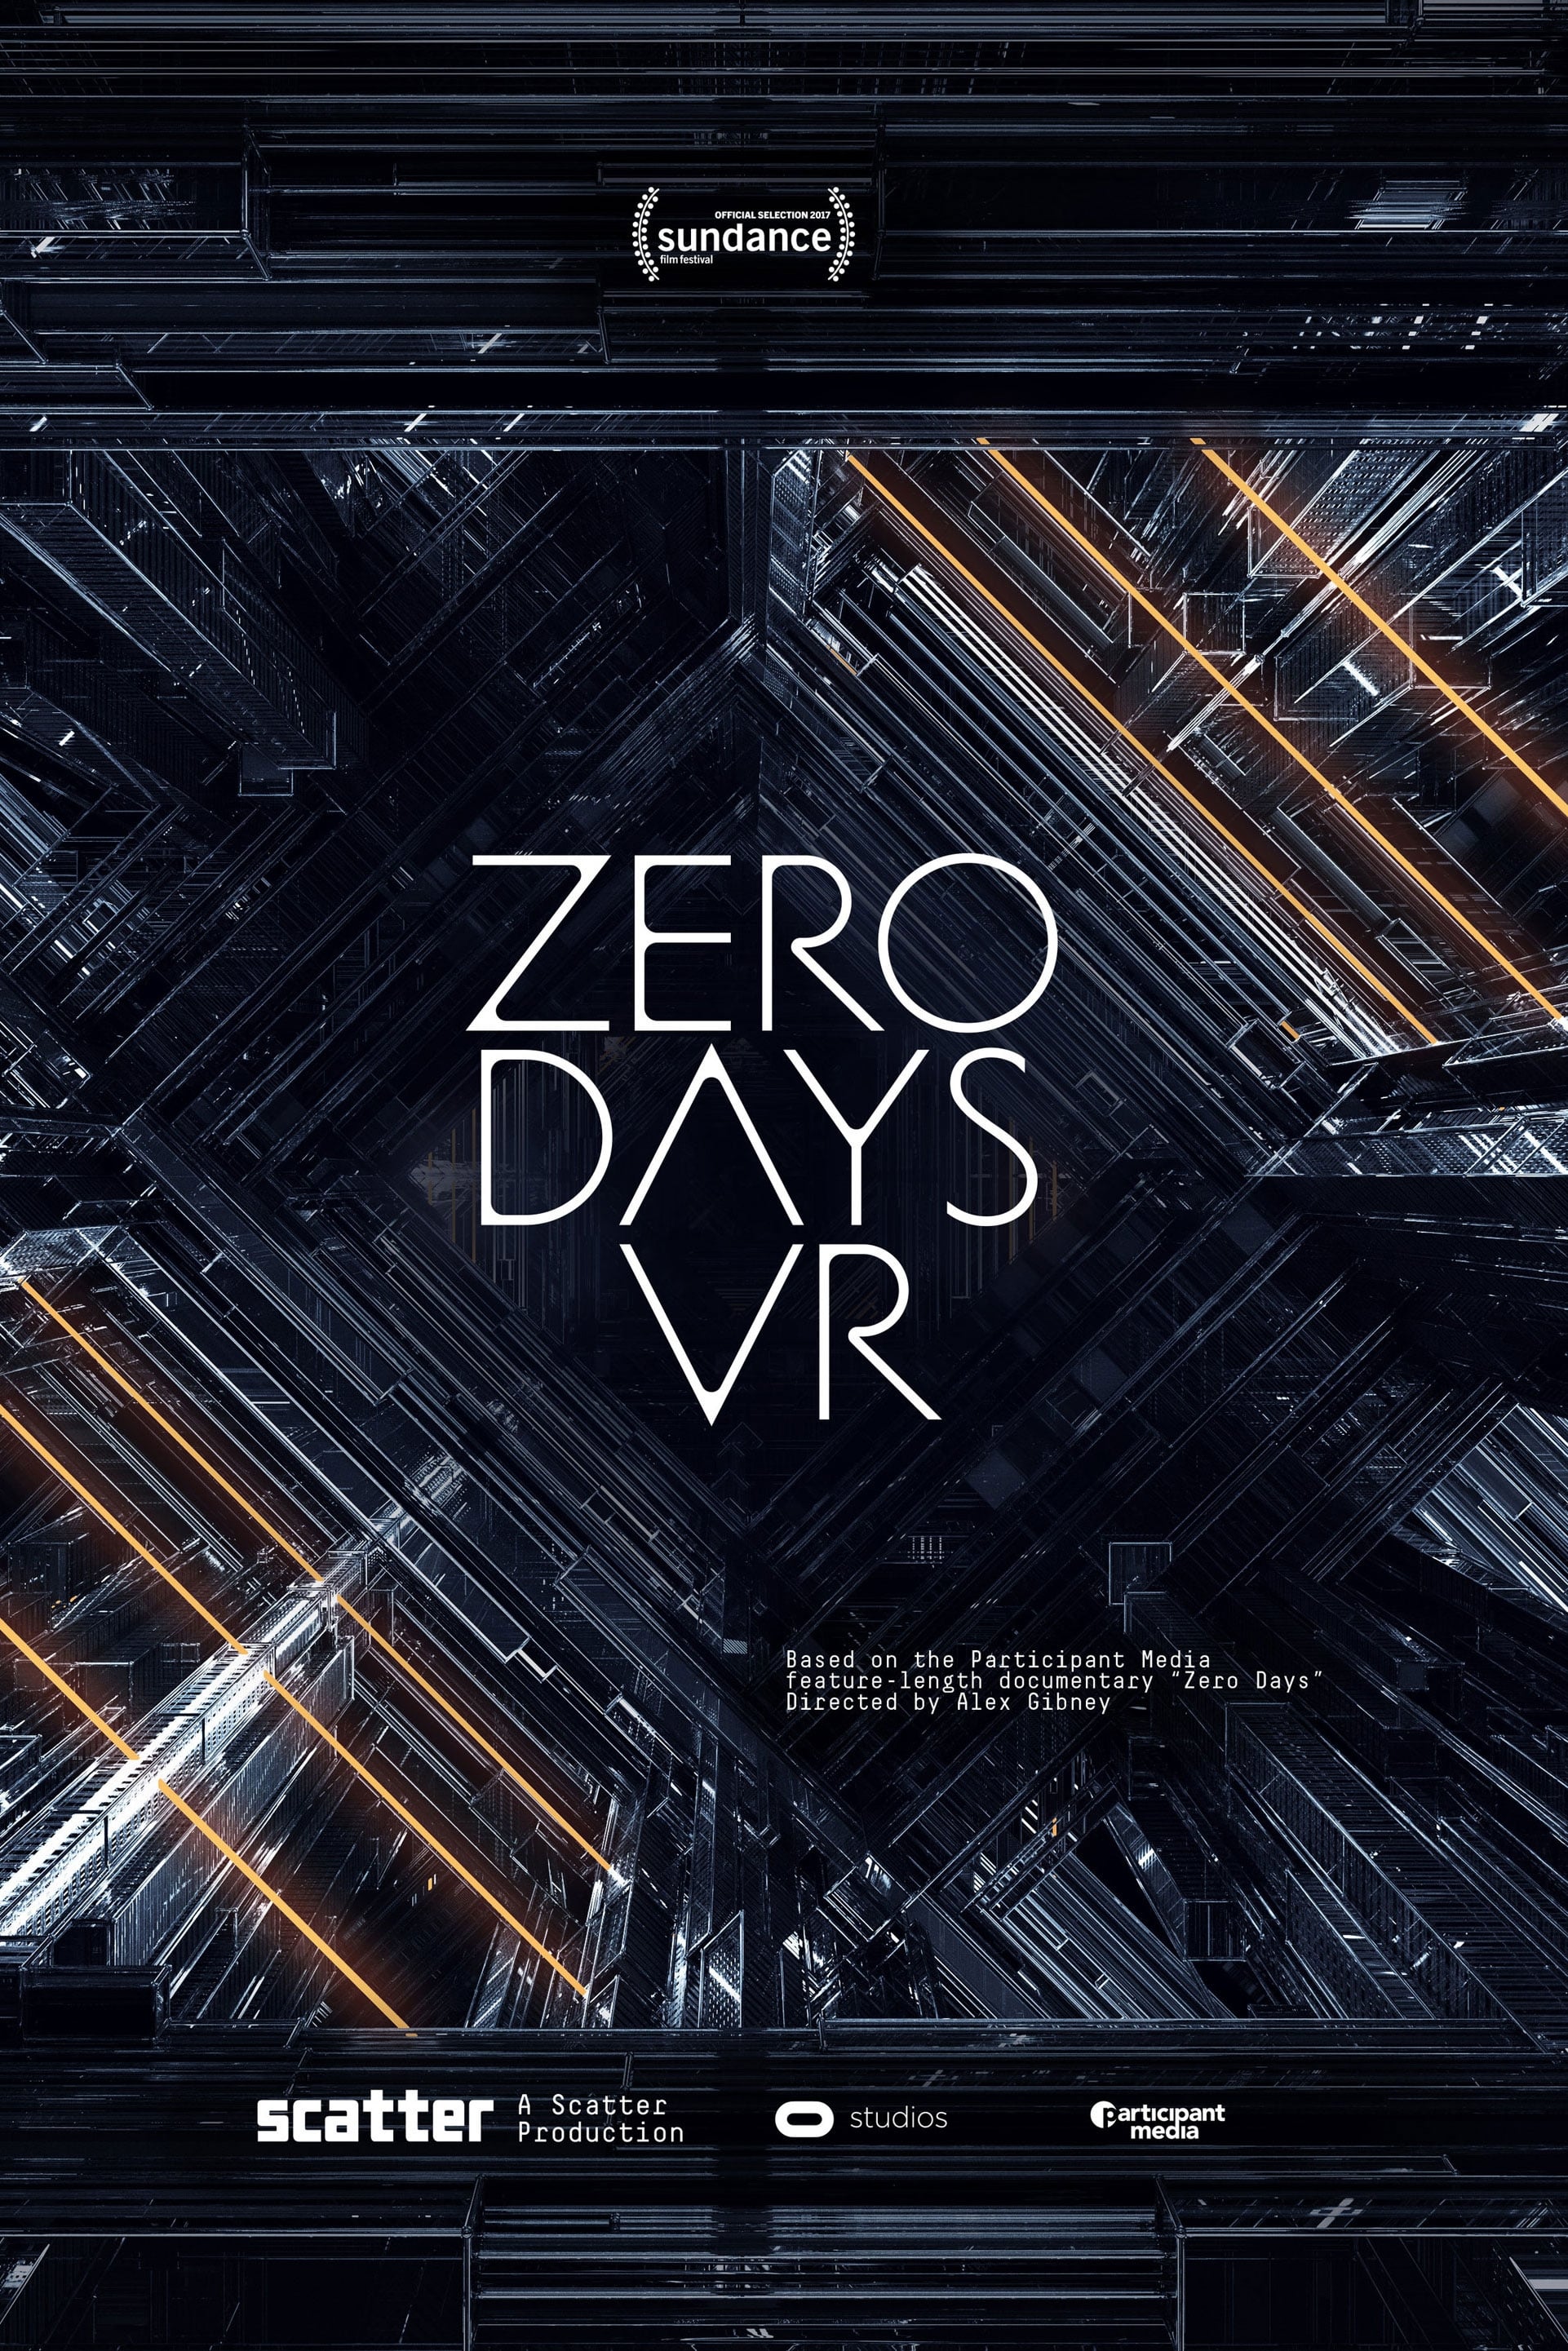 Zero Days VR